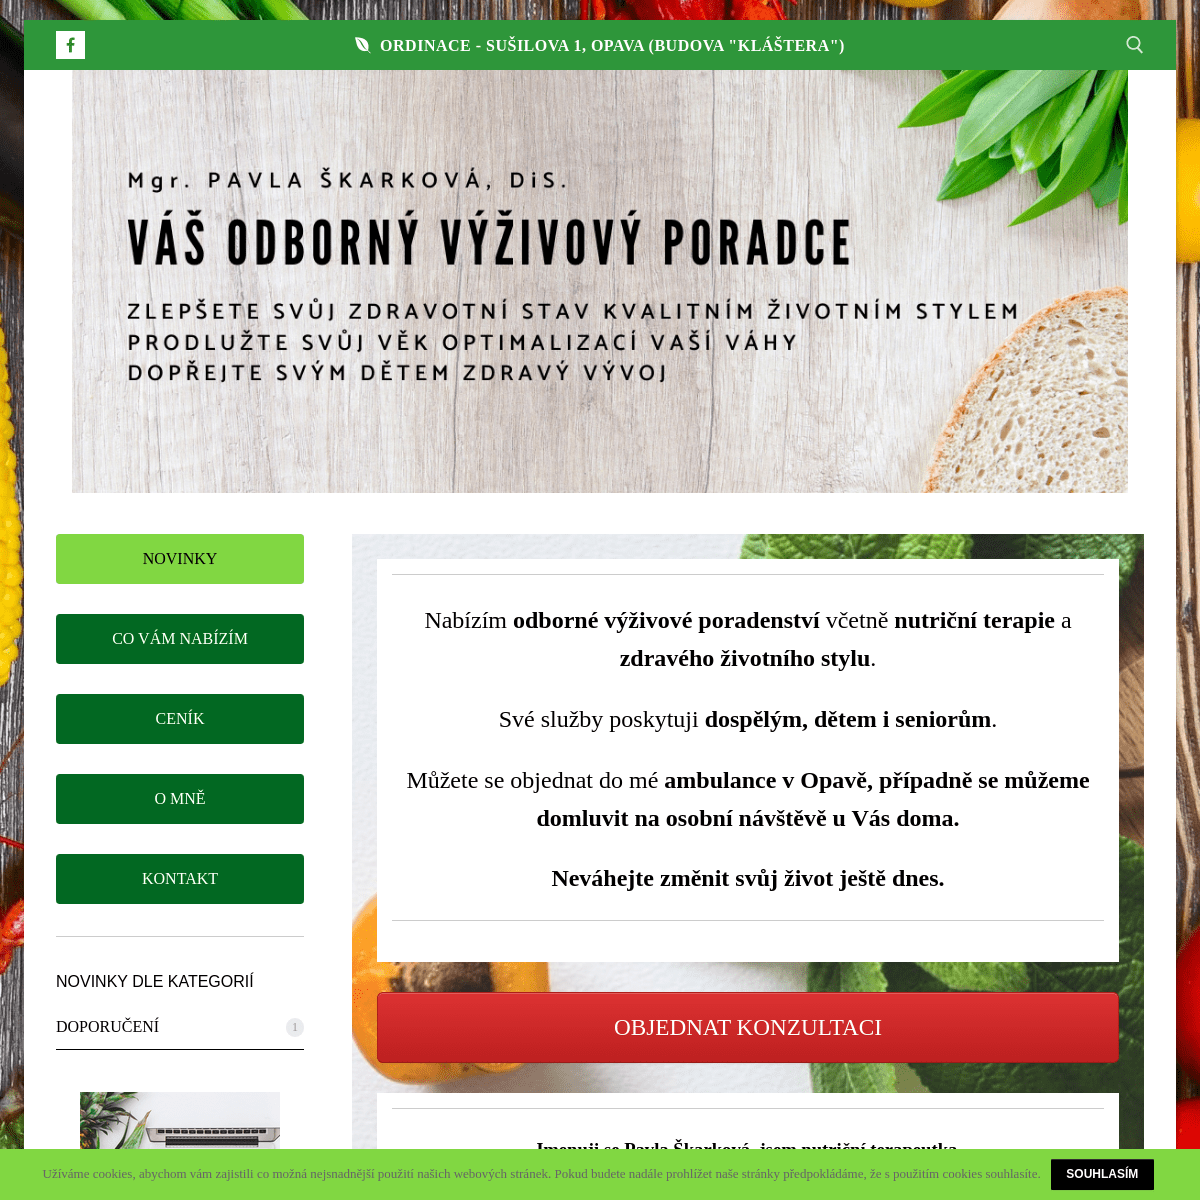 A complete backup of vyziva-poradenstvi.cz